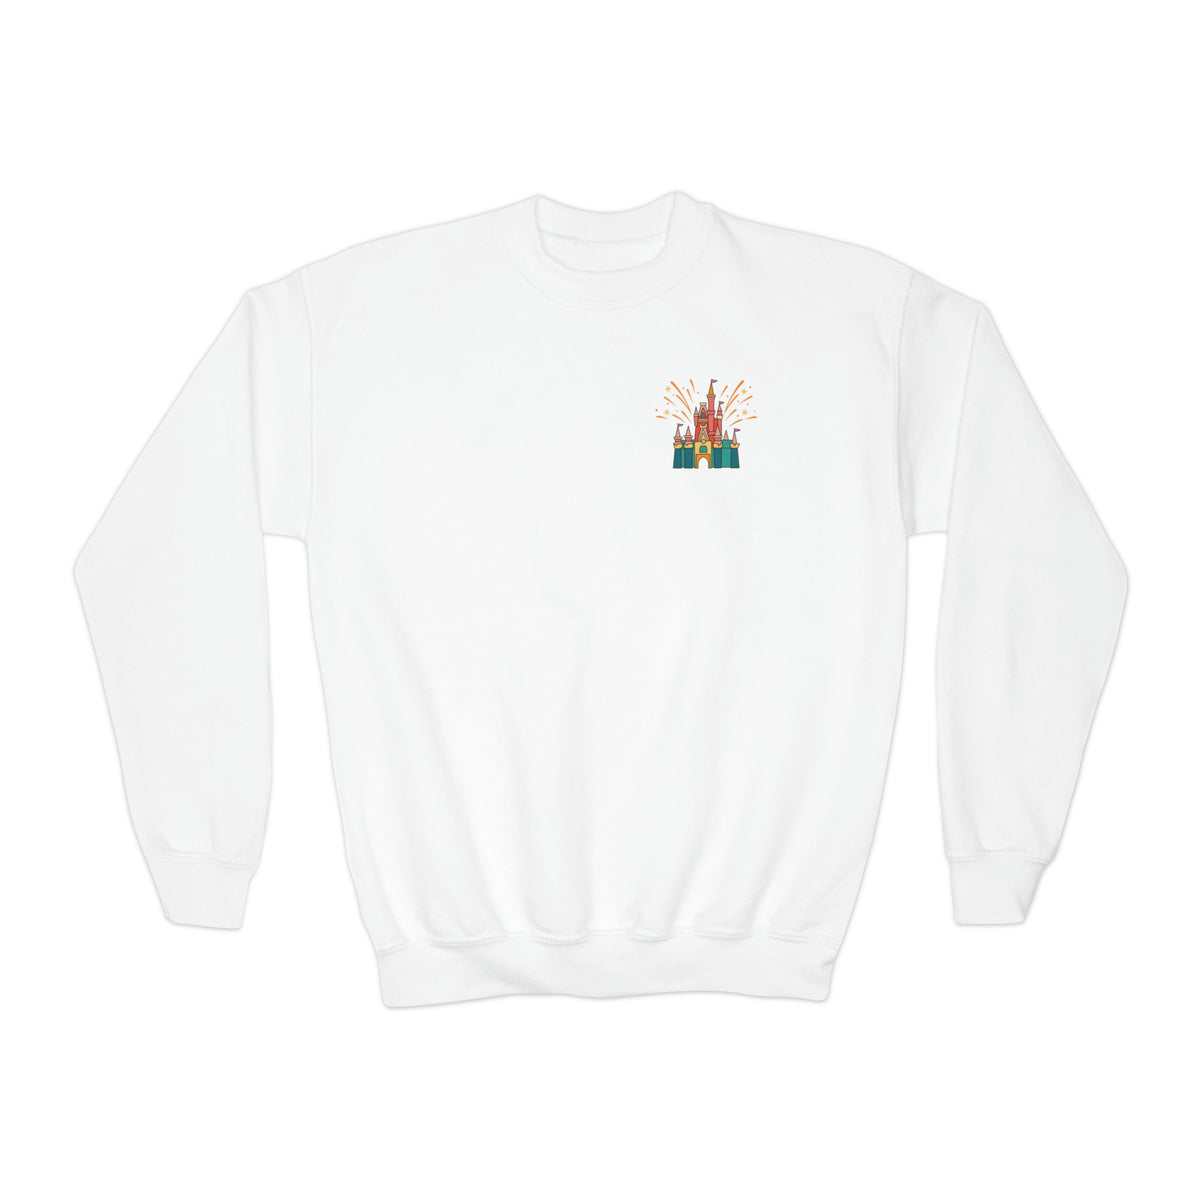 Long Live All The Magic We Made Gildan Youth Crewneck Sweatshirt